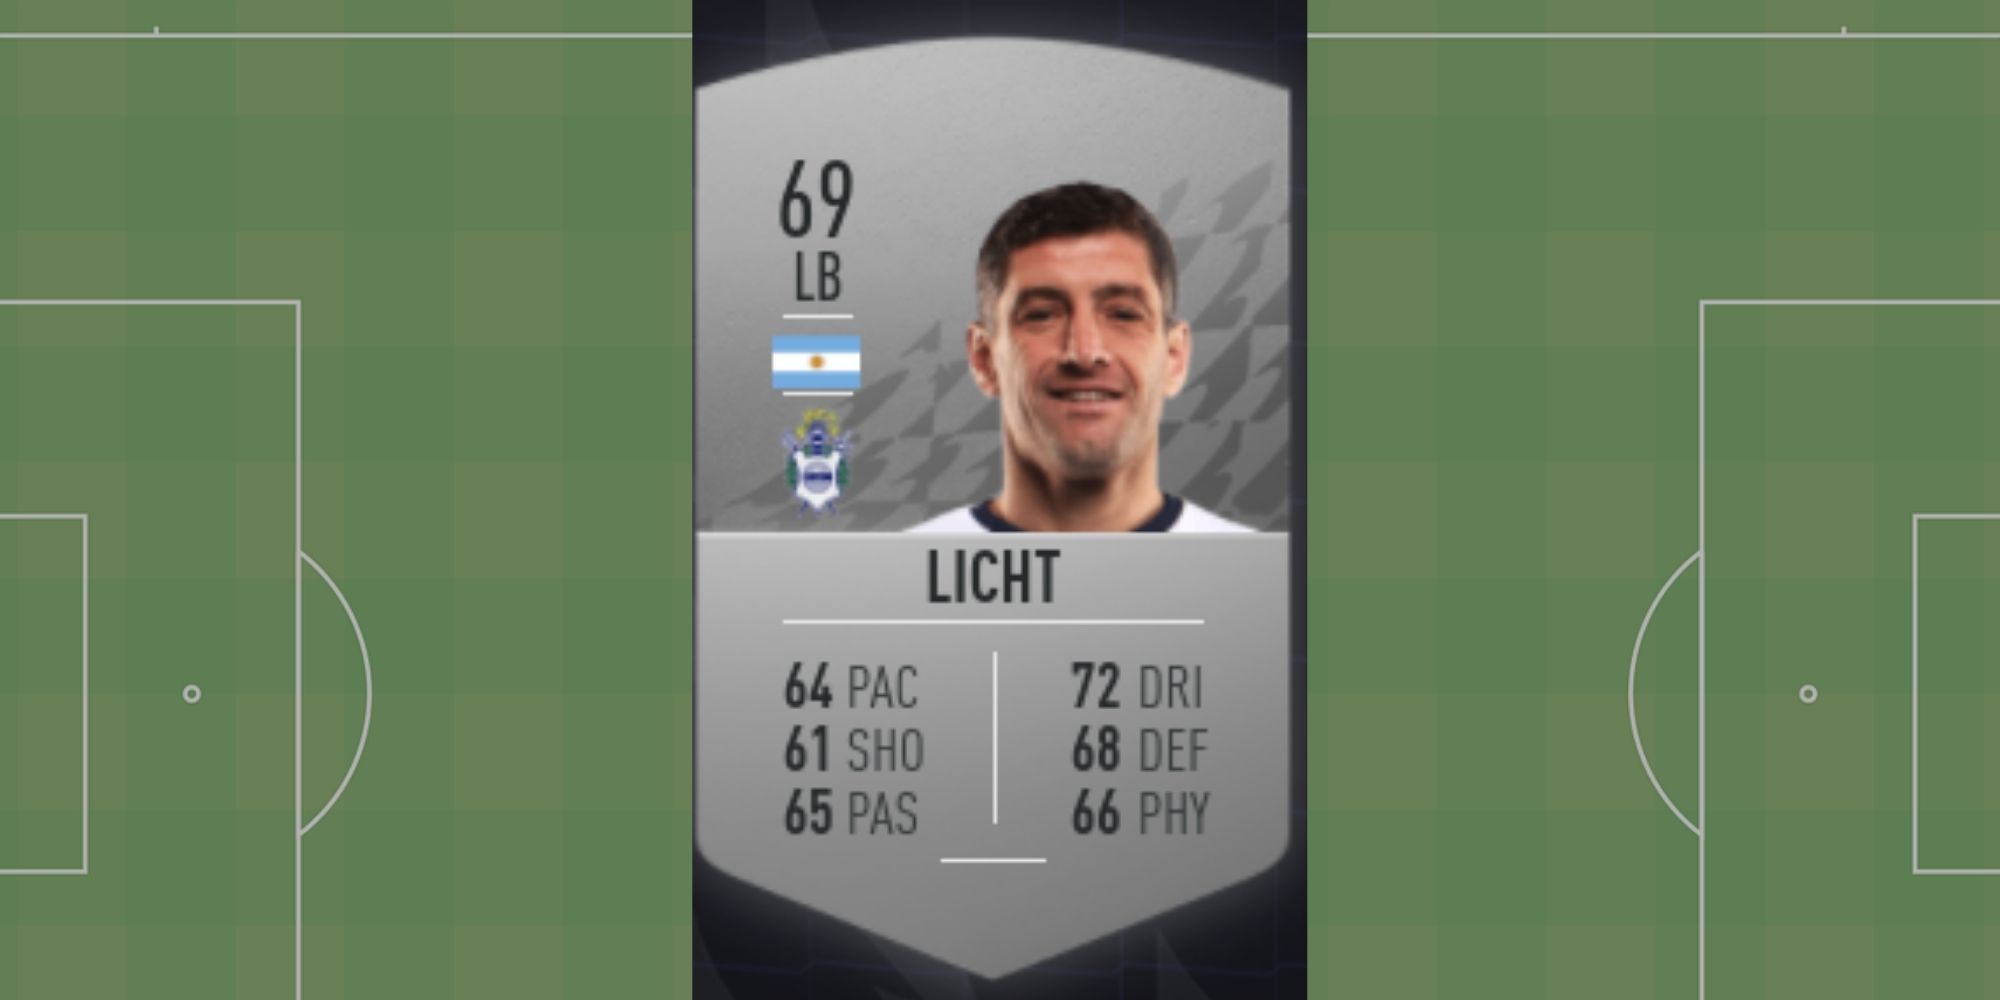 Lucas Licht's FUT card in FIFA 22.